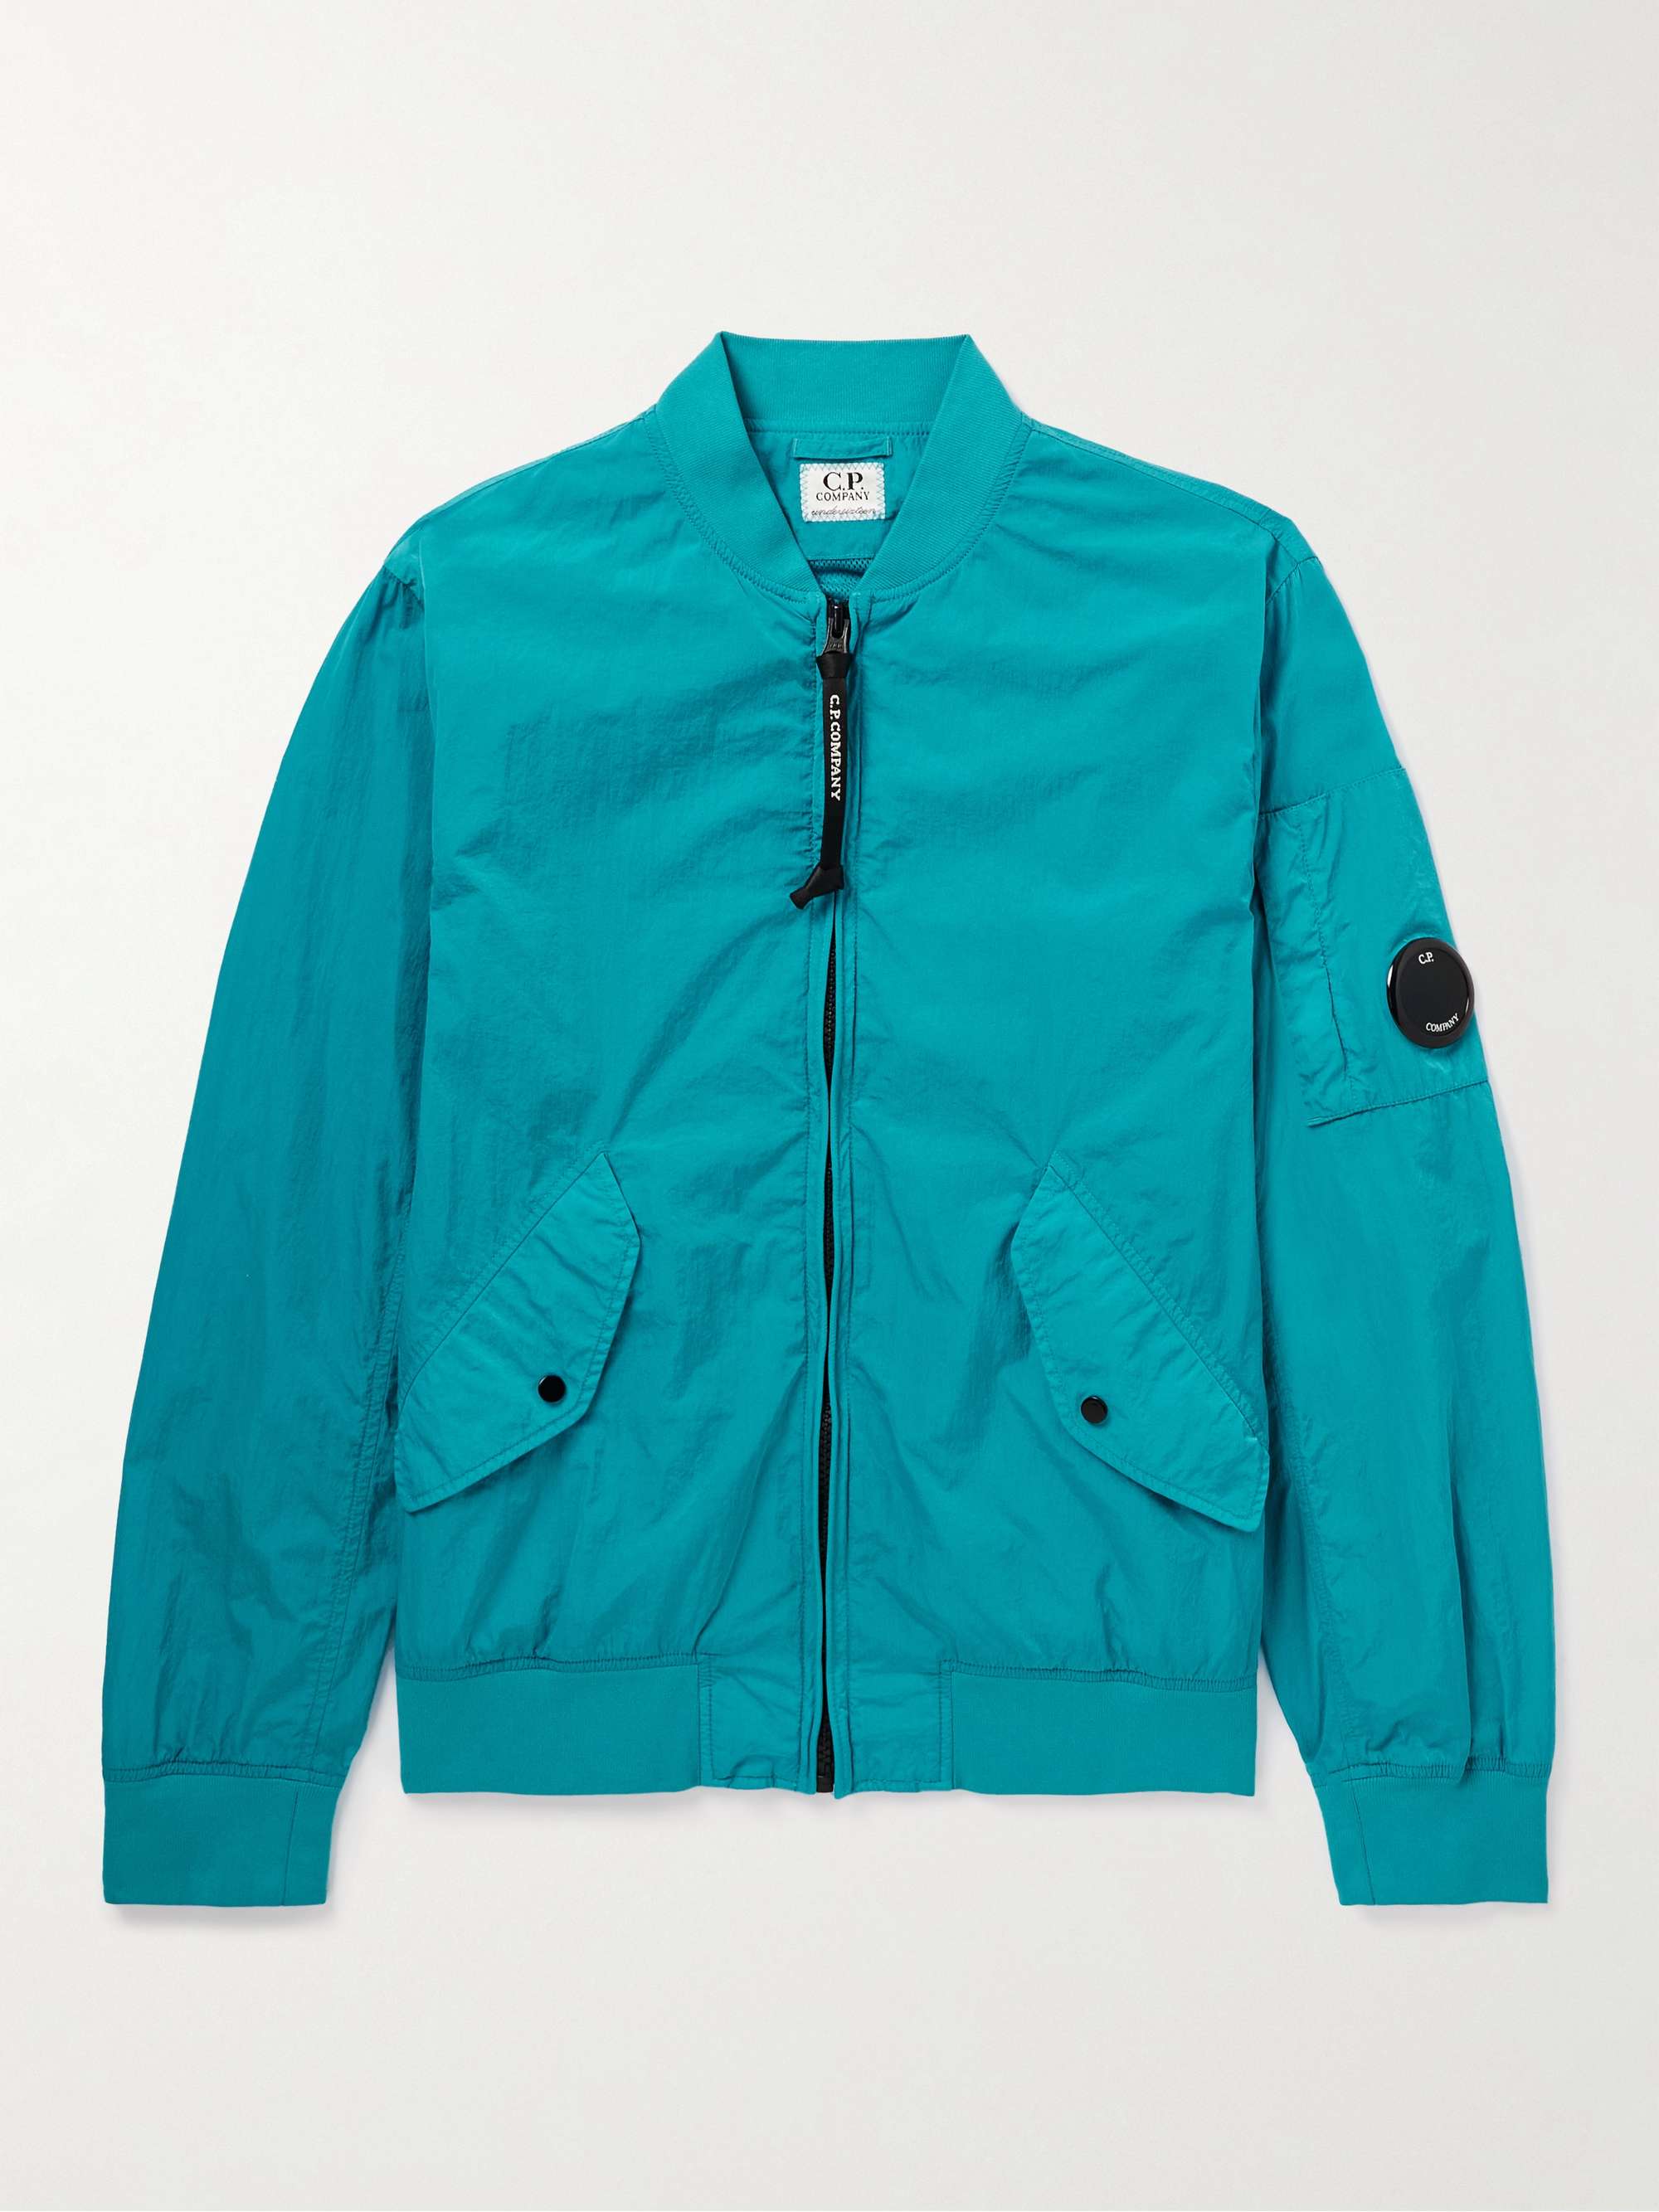 C.P. COMPANY KIDS Ages 8-10 Garment-Dyed Chrome-R Bomber Jacket | MR PORTER